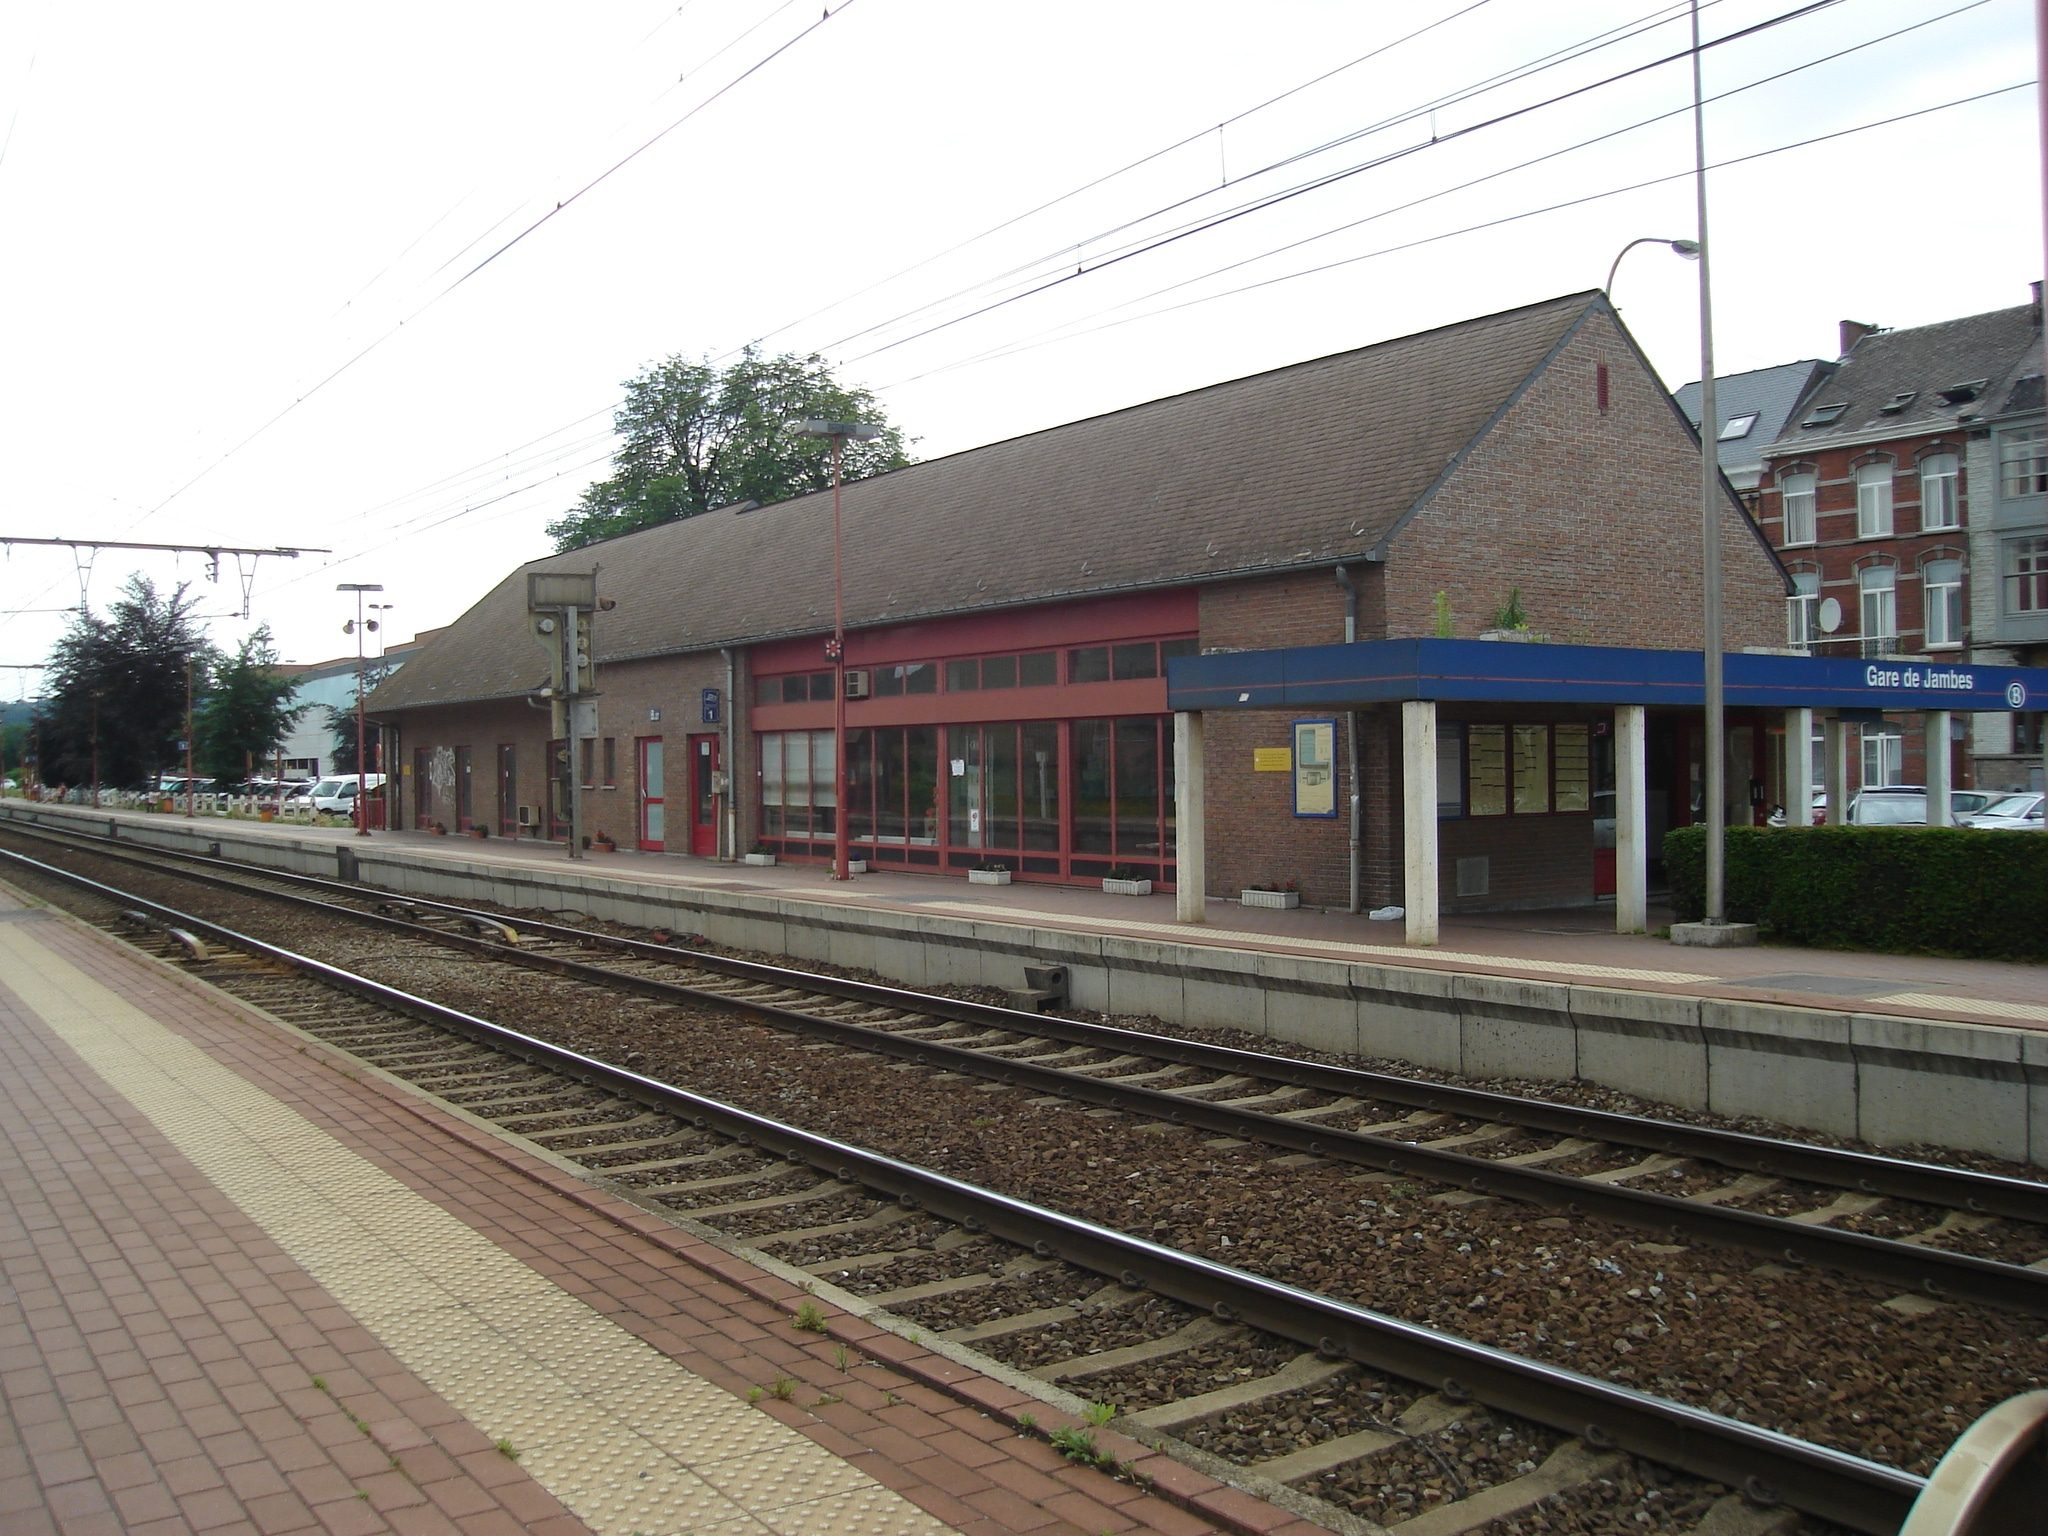 ЖД Бельгии. Orebro Central Station. 495 км